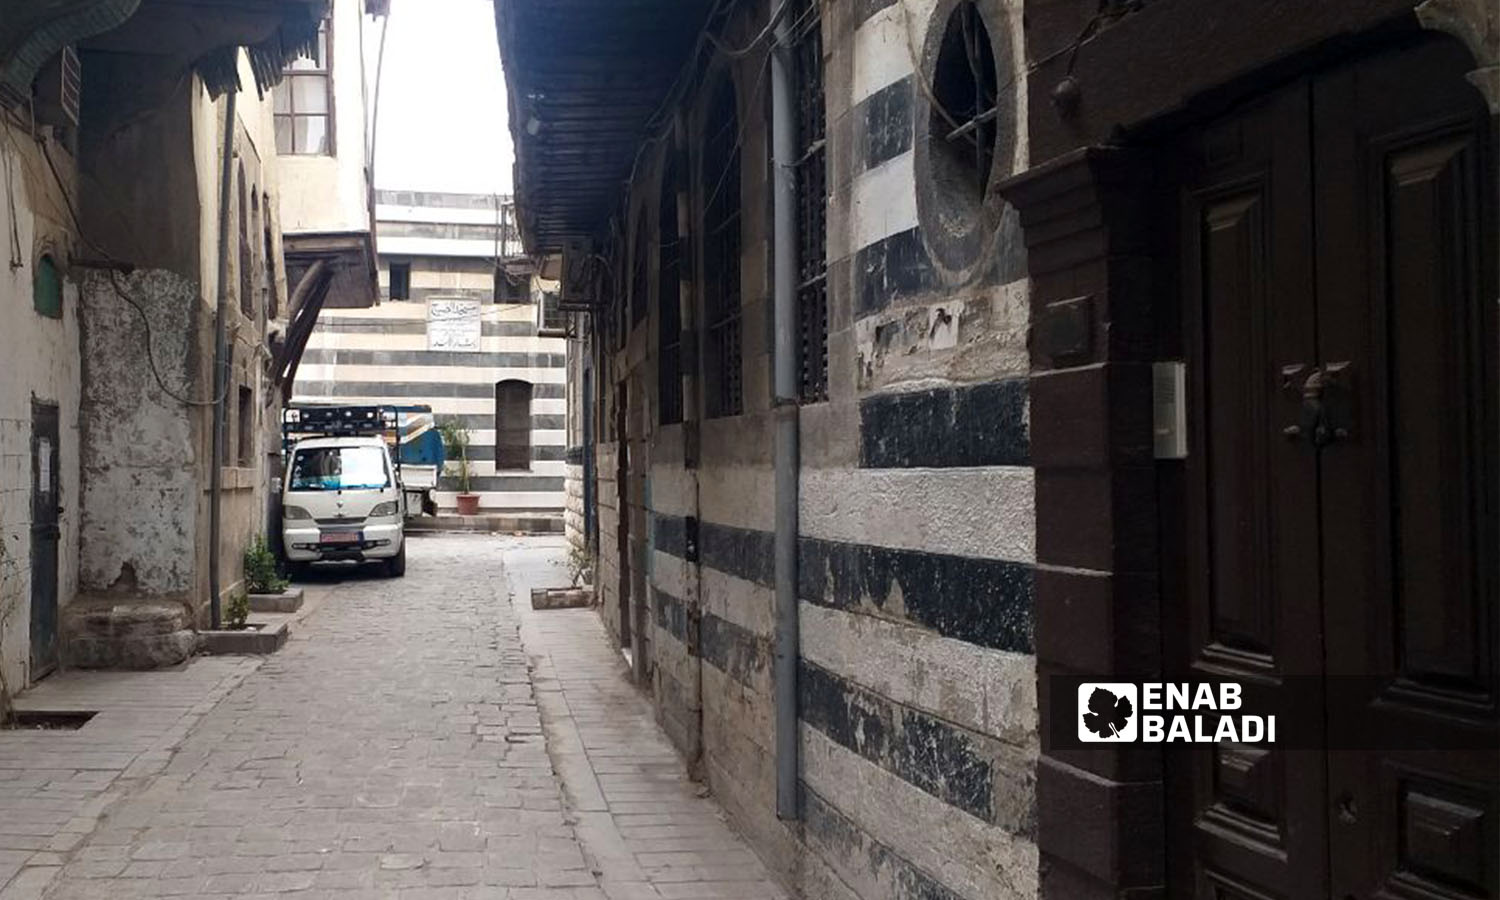 The old Sarouja neighborhood in Damascus, March 25, 2022 (Enab Baladi/Hassan Hassan)